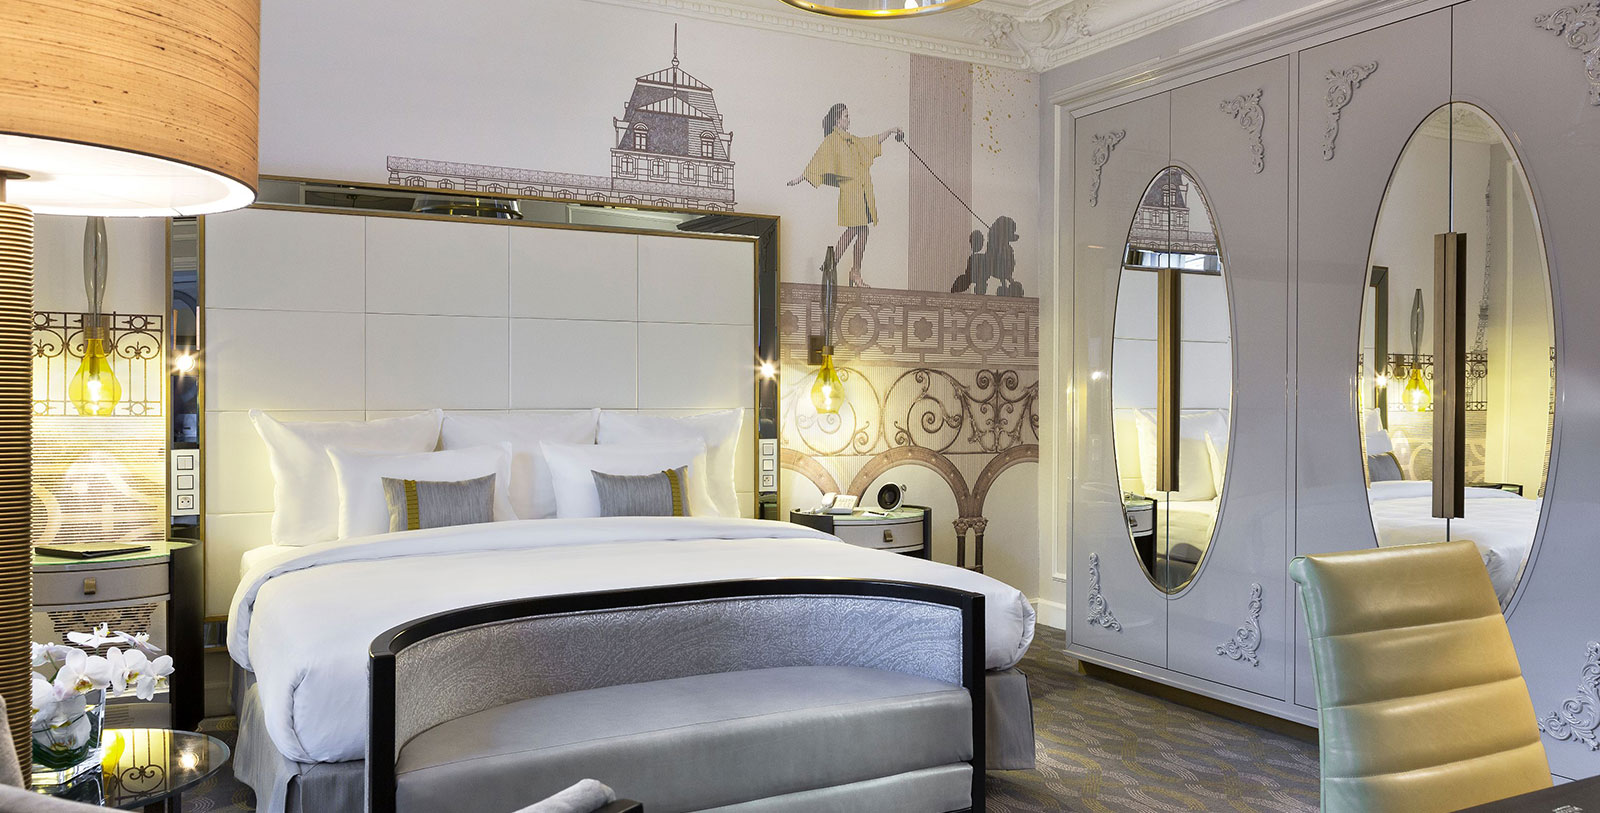 Image of Executive Room, Hilton Paris Opera, France, 1889, Member of Historic Hotels Worldwide, Accommodations